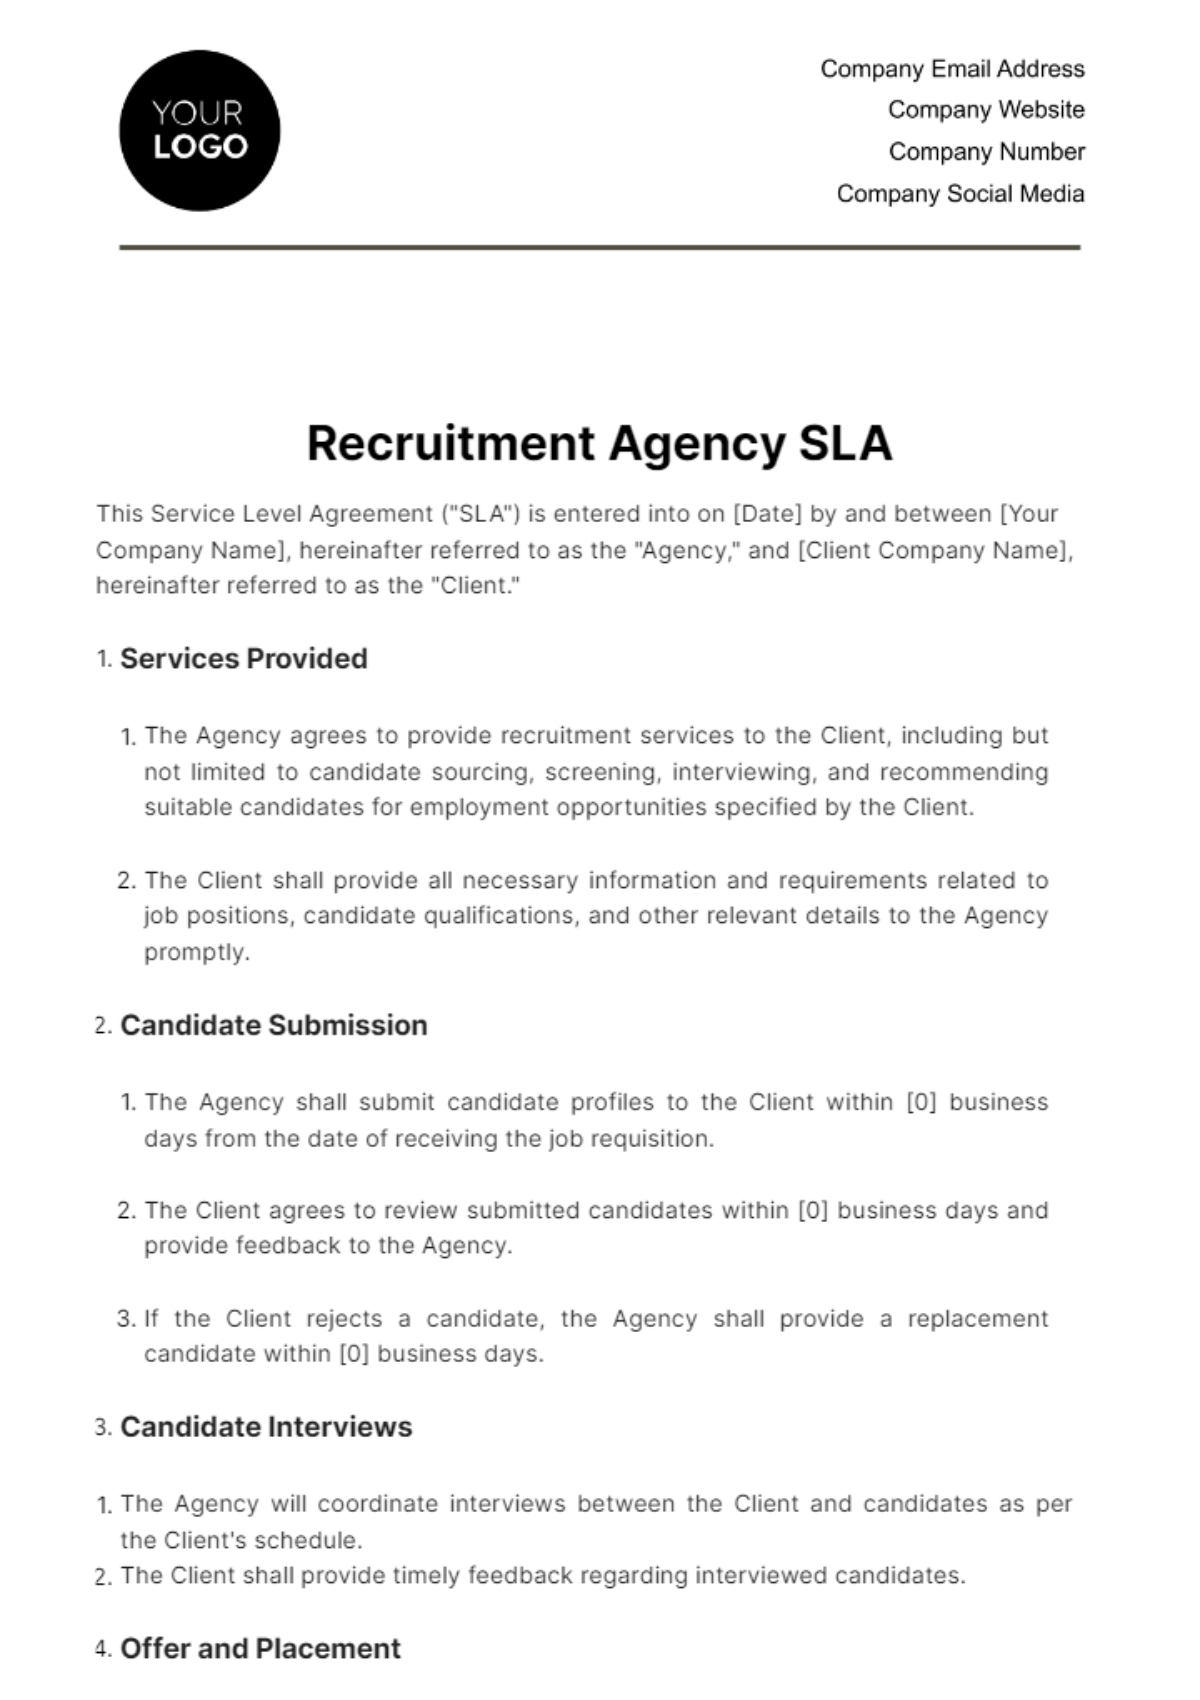 Recruitment Agency SLA HR Template